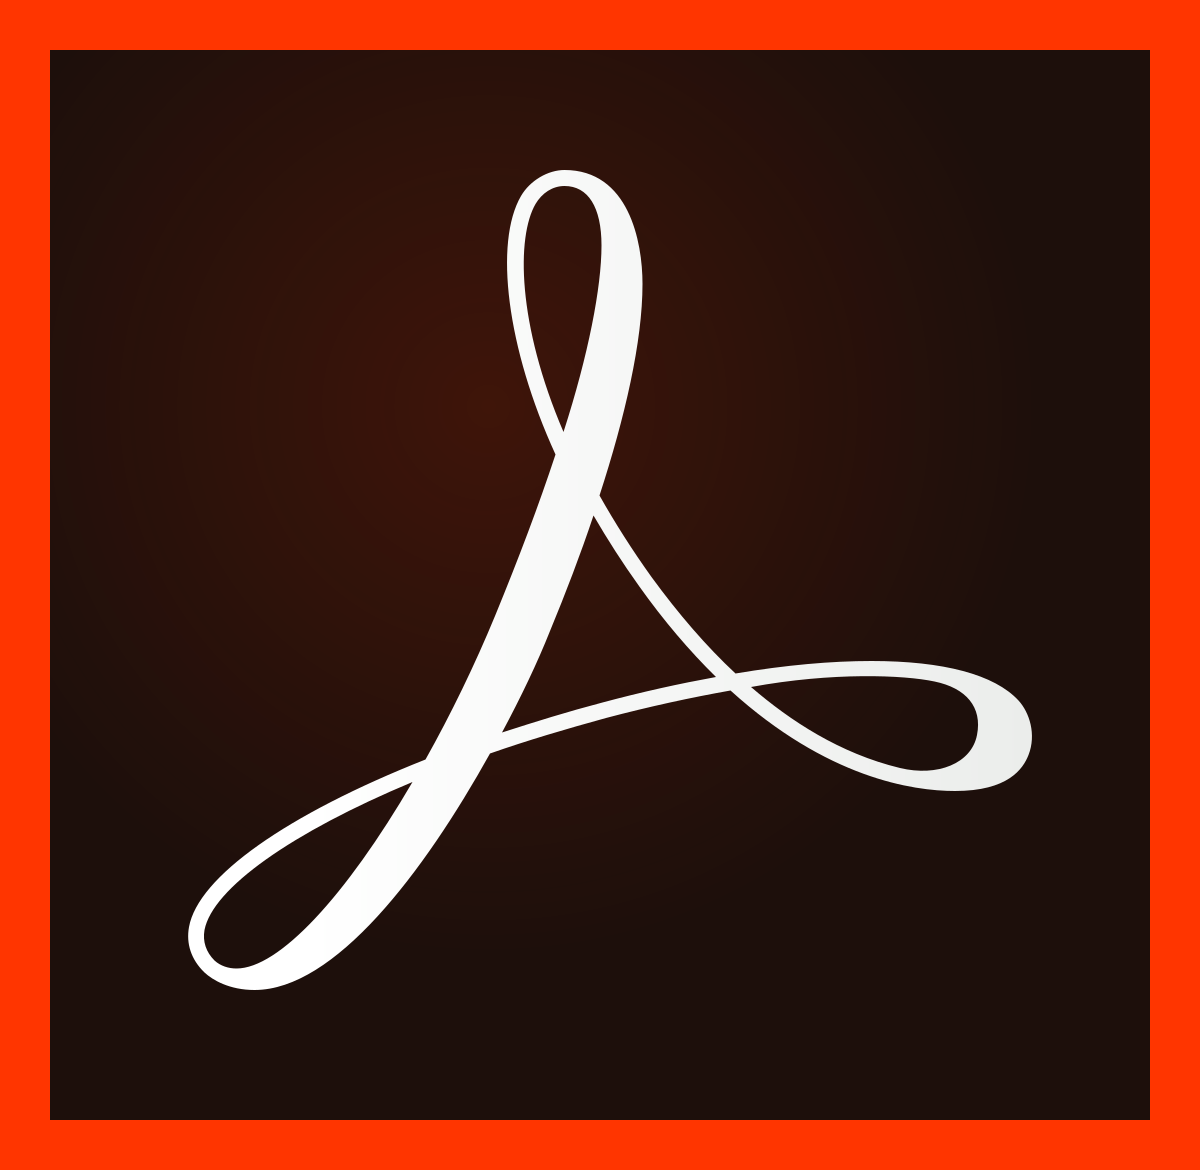 Adobe PDF icon